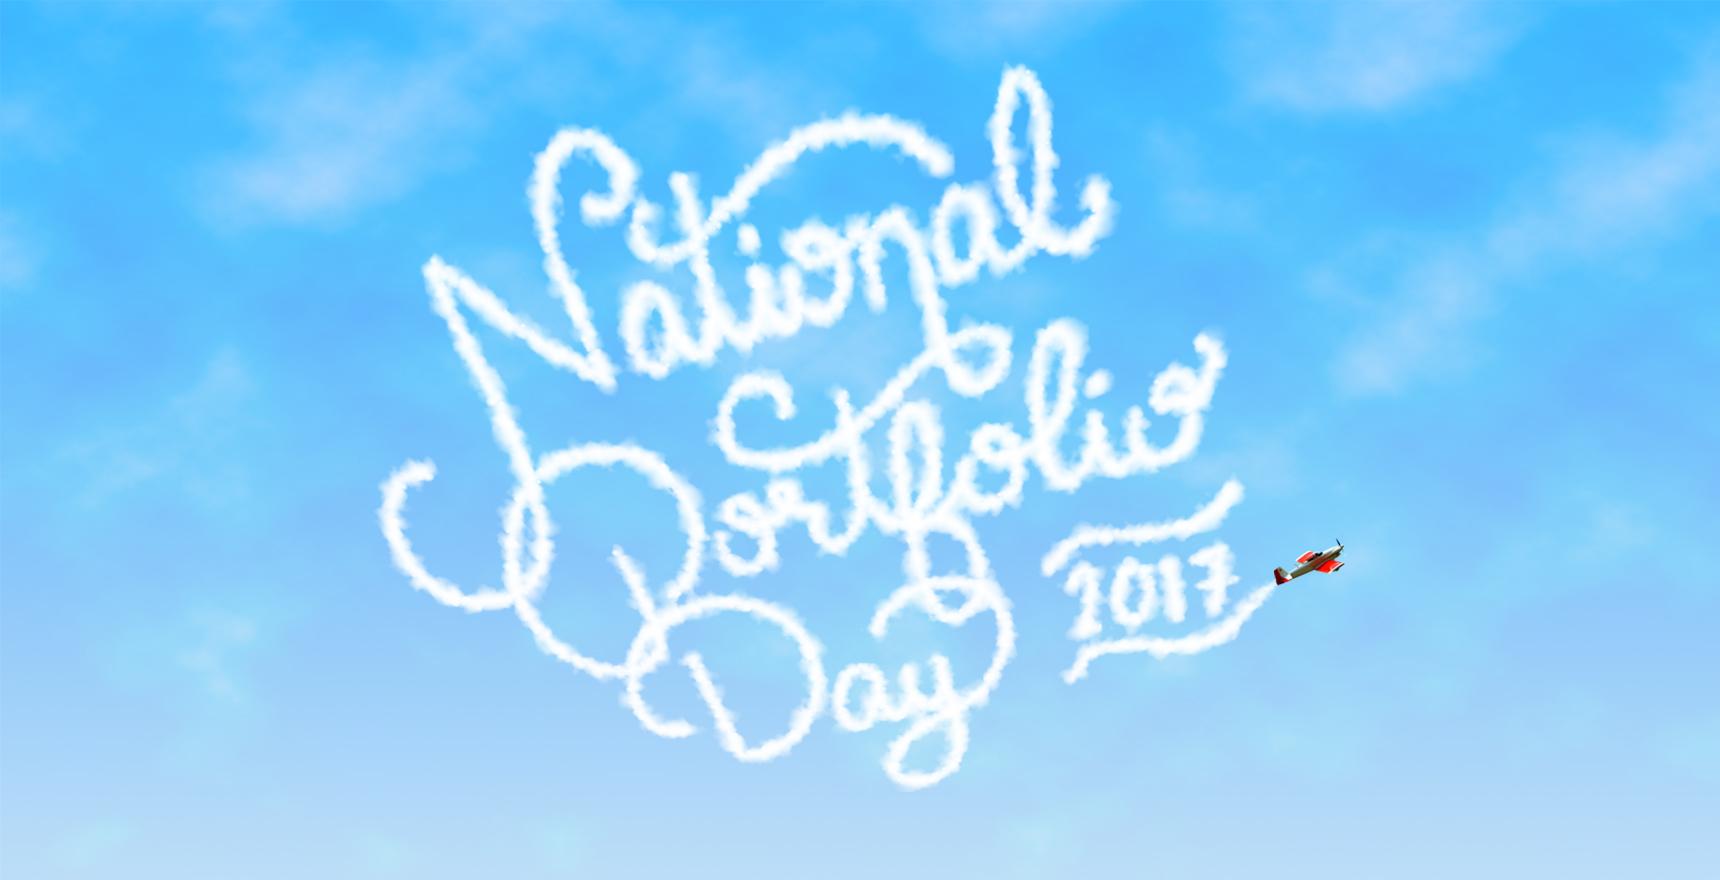 National portfolio day graphic